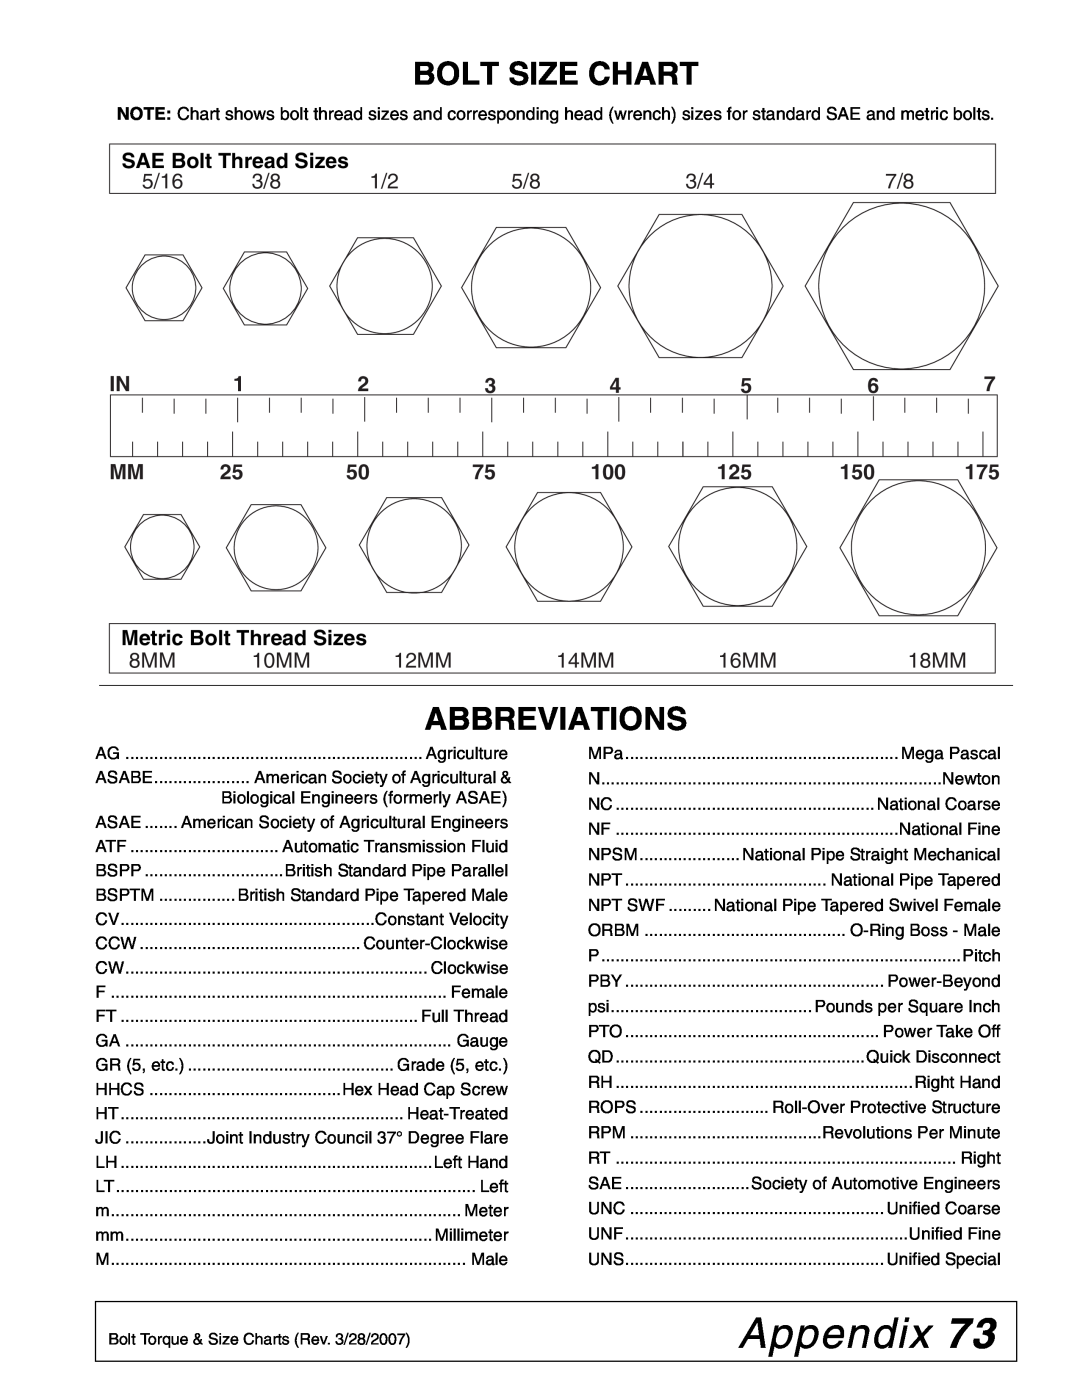 Woods Equipment BW180HD Appendix, Bolt Size Chart, Abbreviations, SAE Bolt Thread Sizes, 5/16, Metric Bolt Thread Sizes 